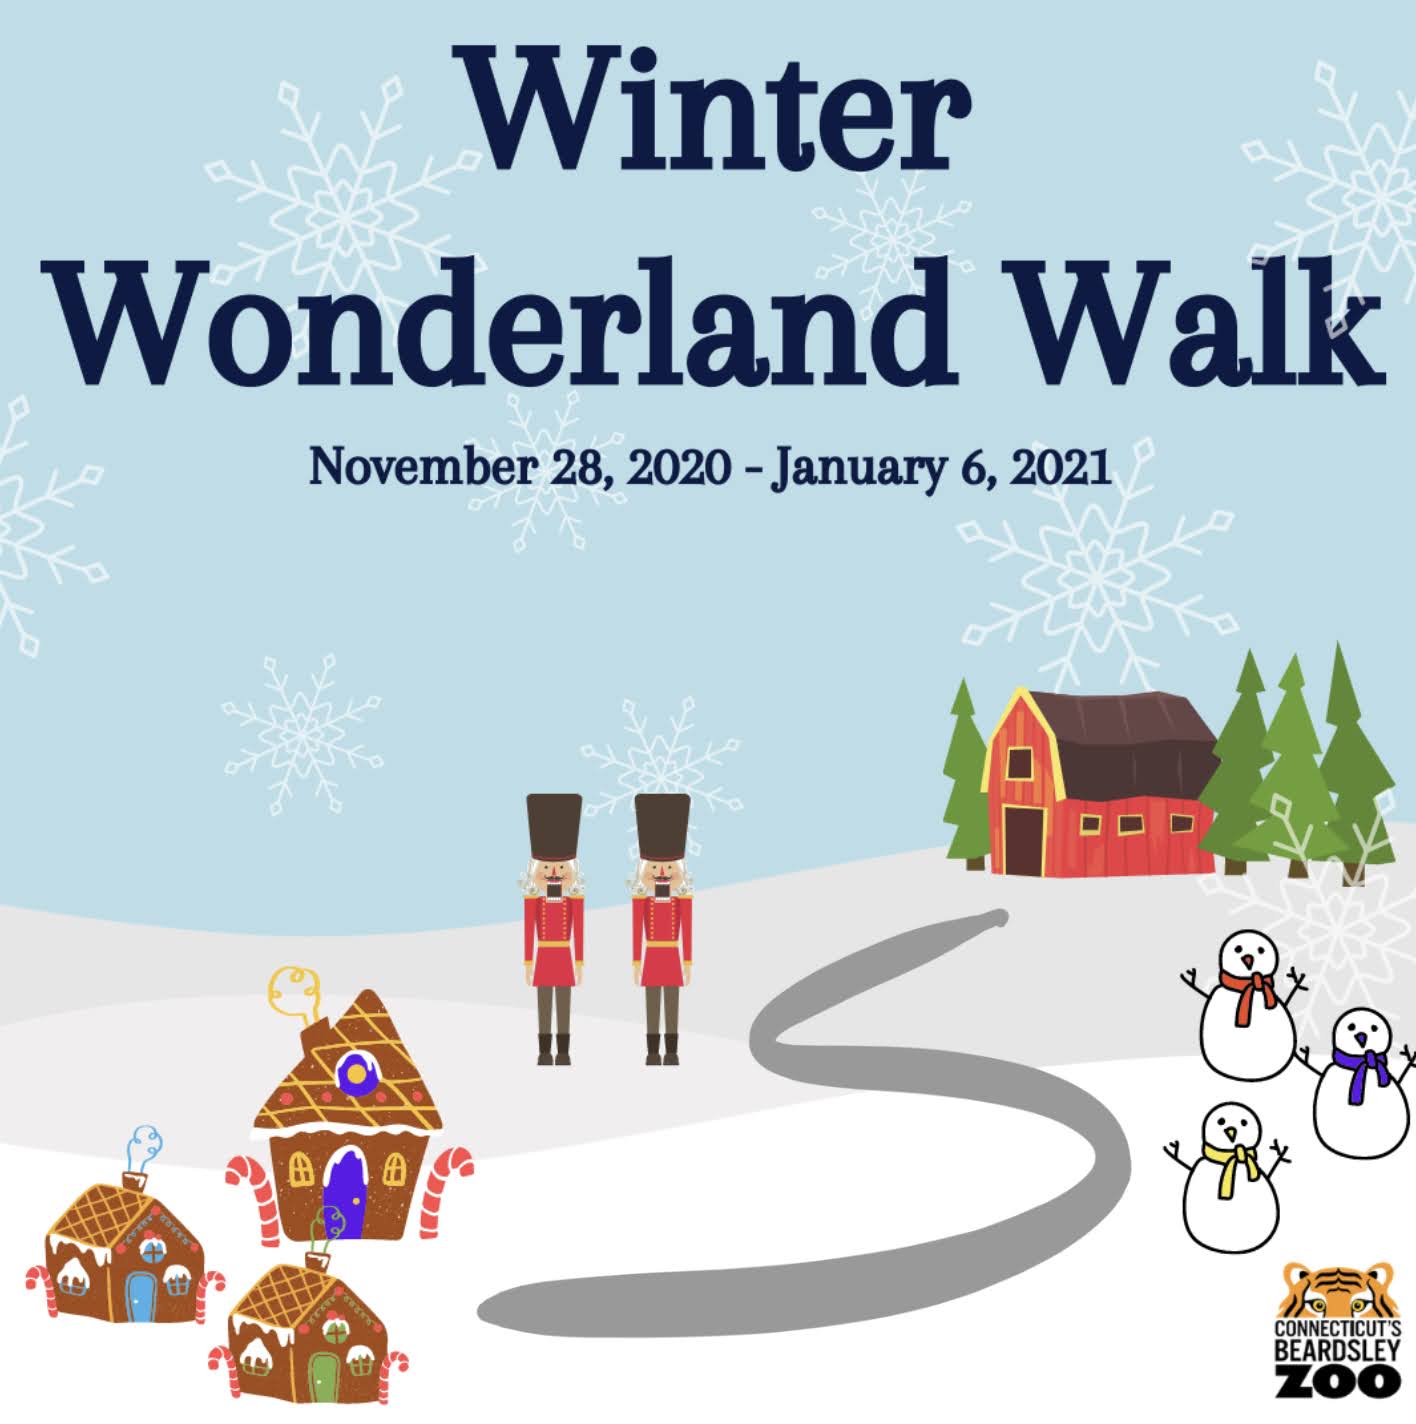 Walk in a Winter Wonderland at Connecticut's Beardsley Zoo